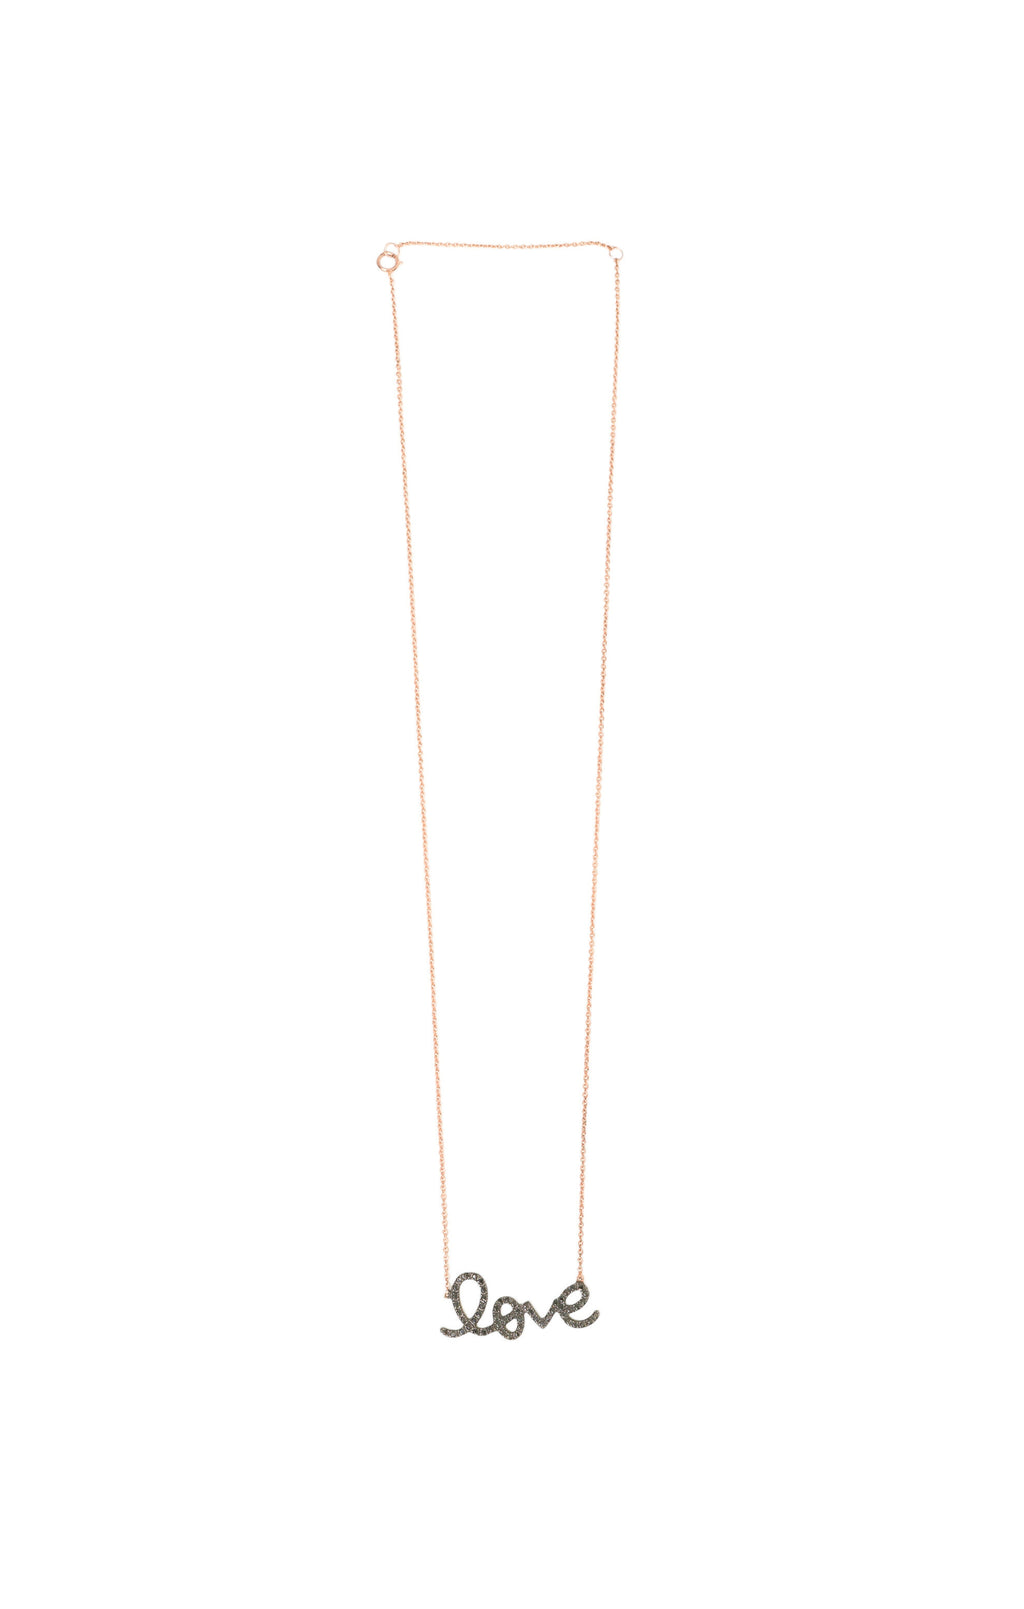 Necklace Size: 17.5"-19.5" x 1mm; Charm: 1.25" x 0.5"